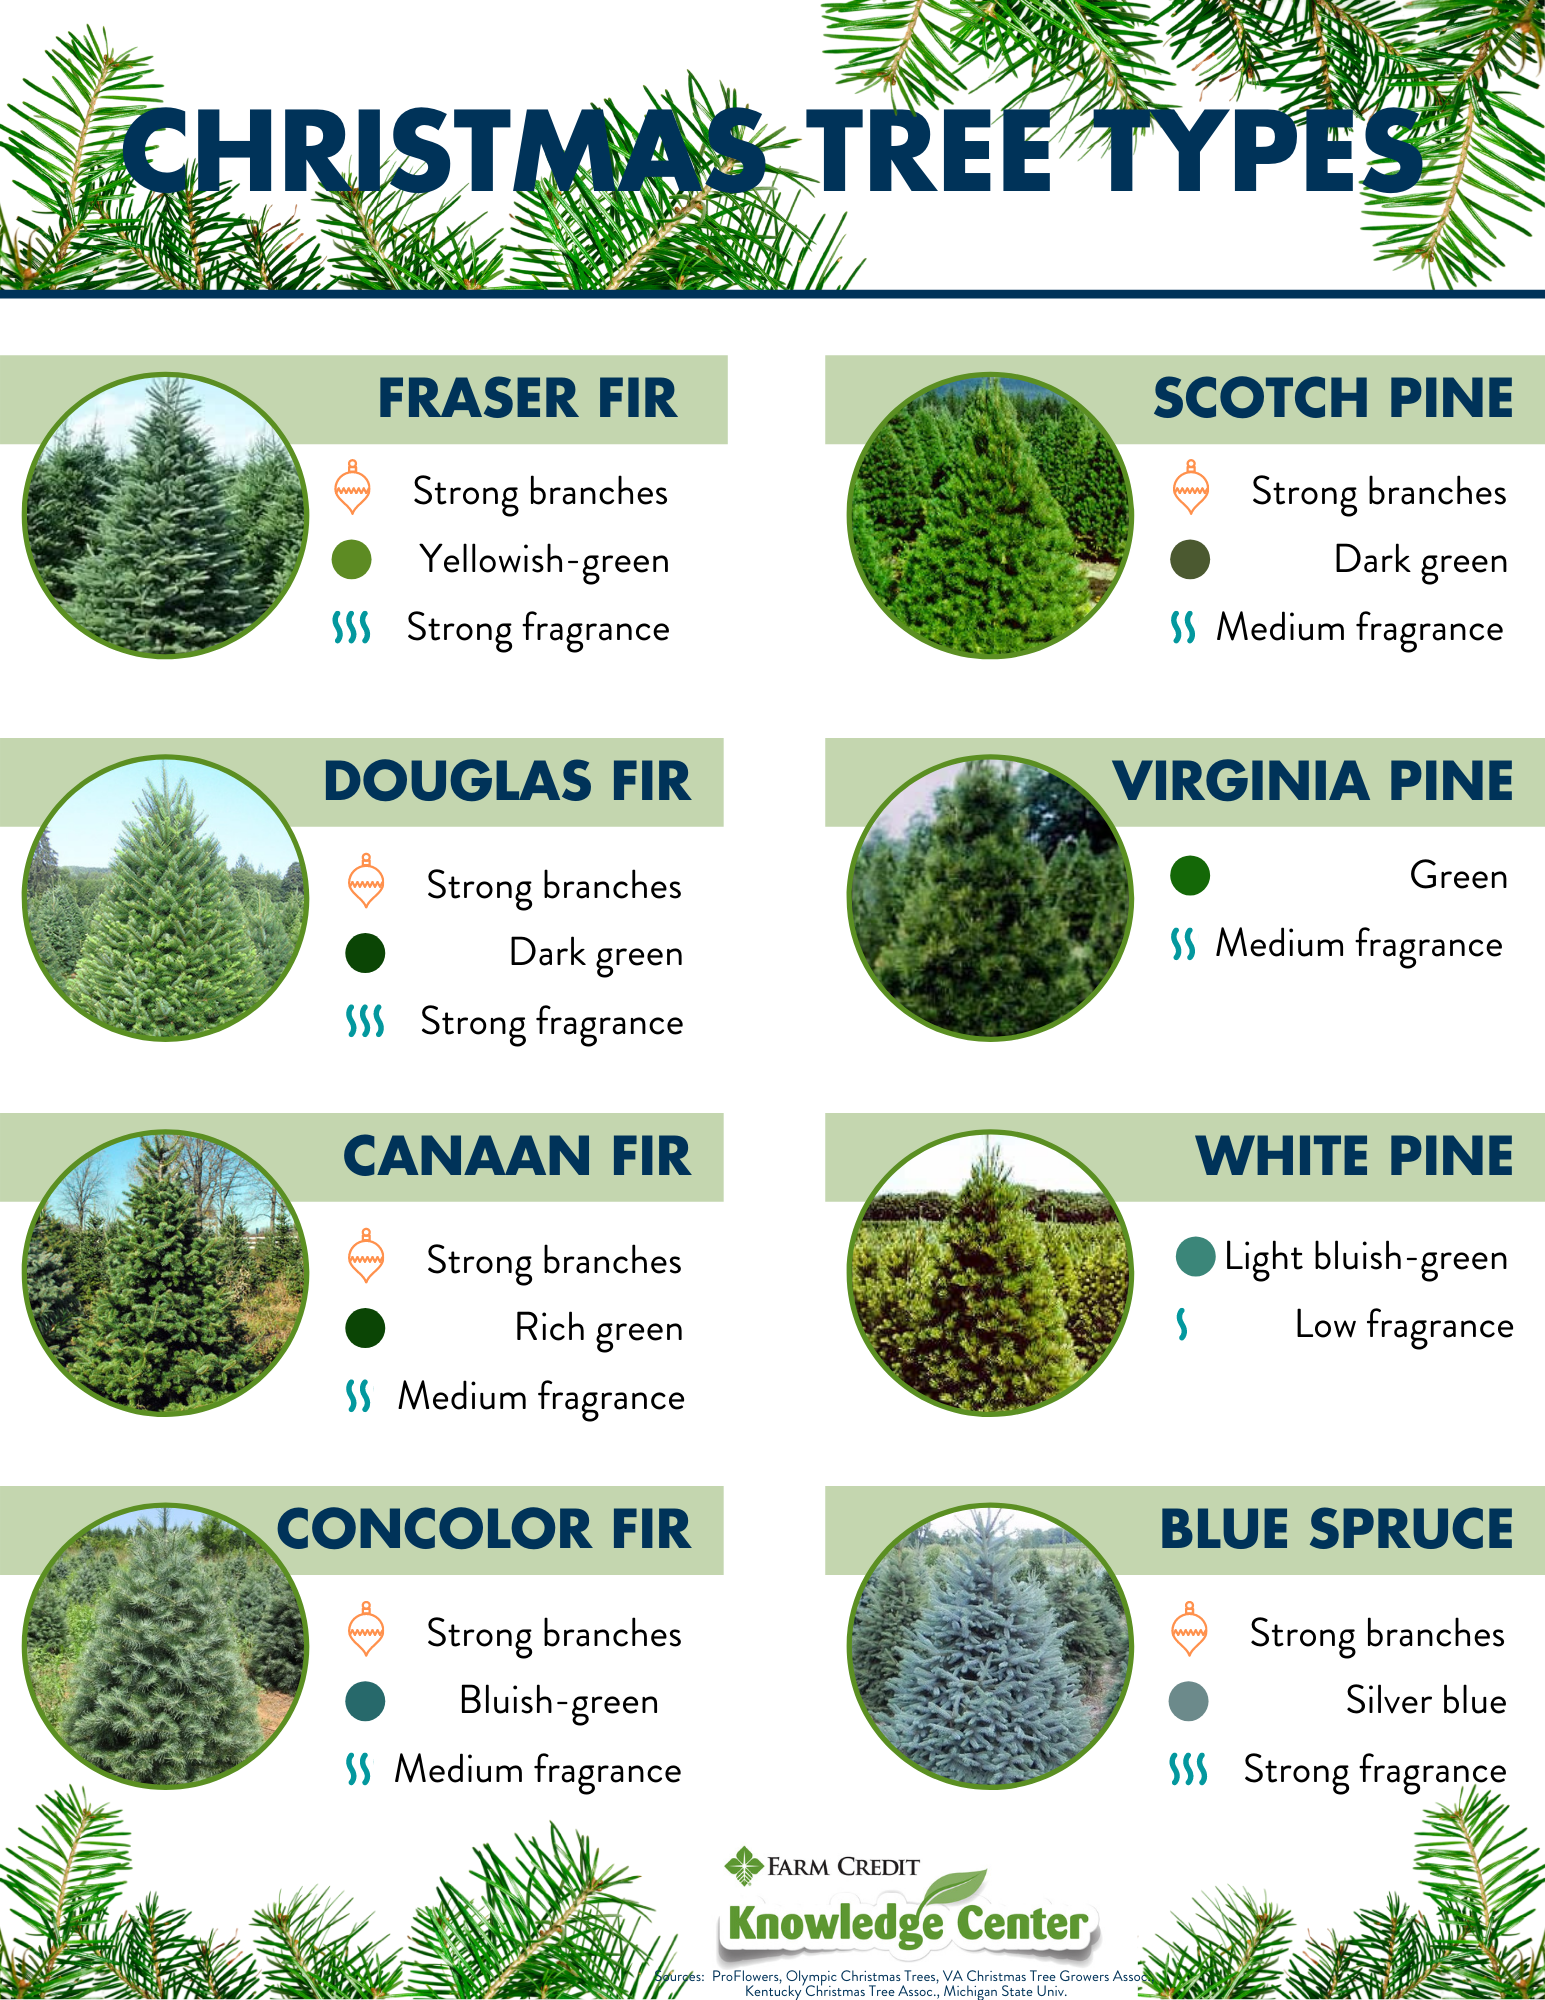 Christmas tree types infographic